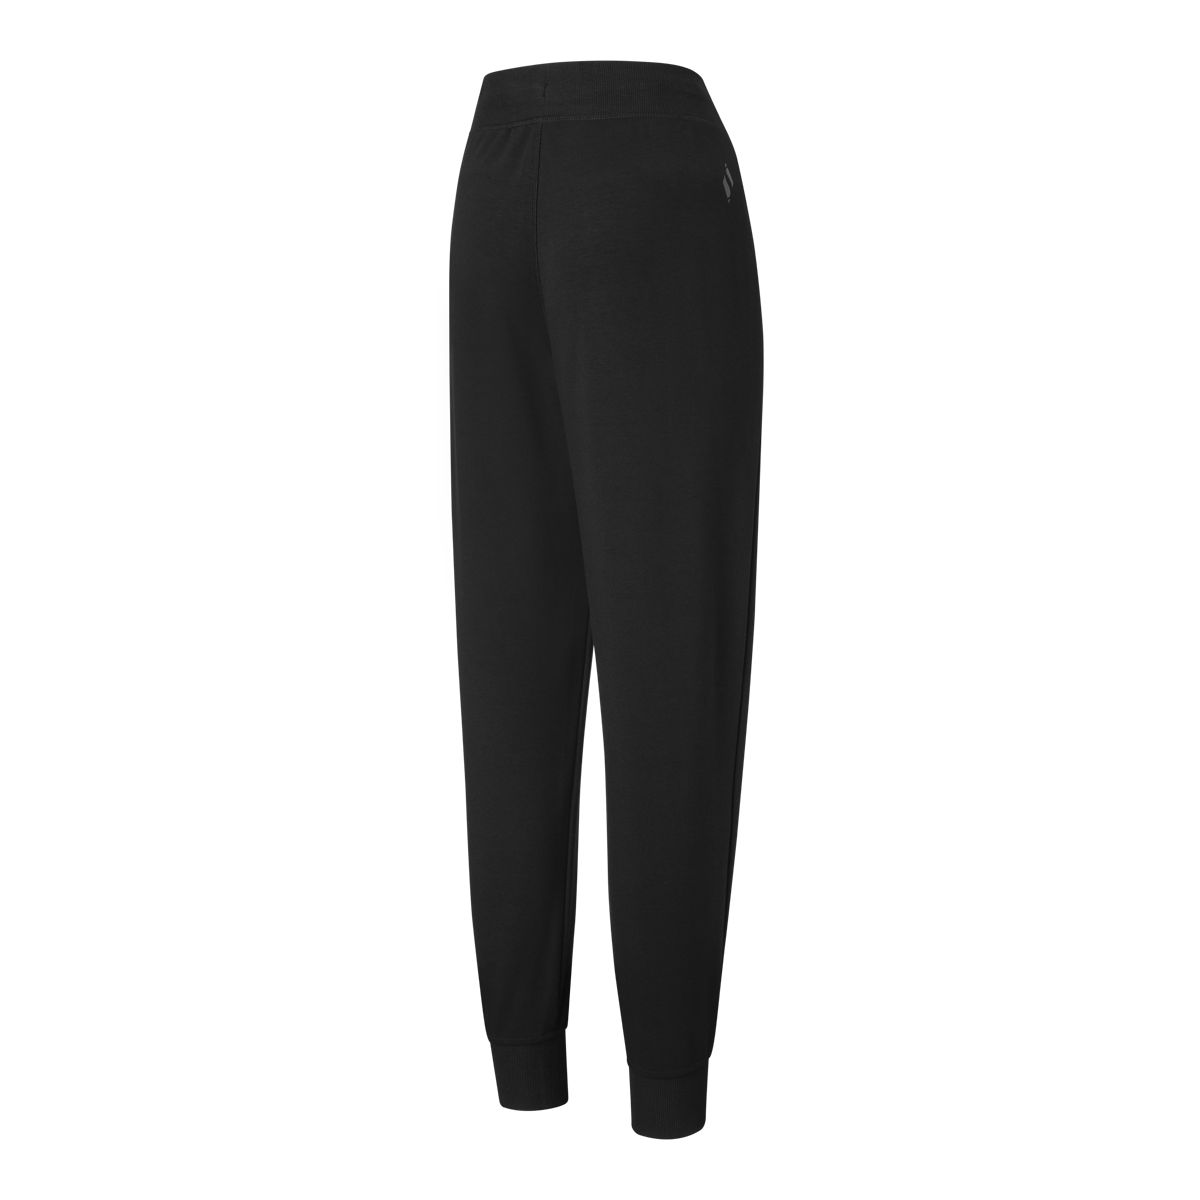 Skechers, Pants & Jumpsuits, Nwt Skechers Skechluxe Restful Jogger Pant  Size Medium